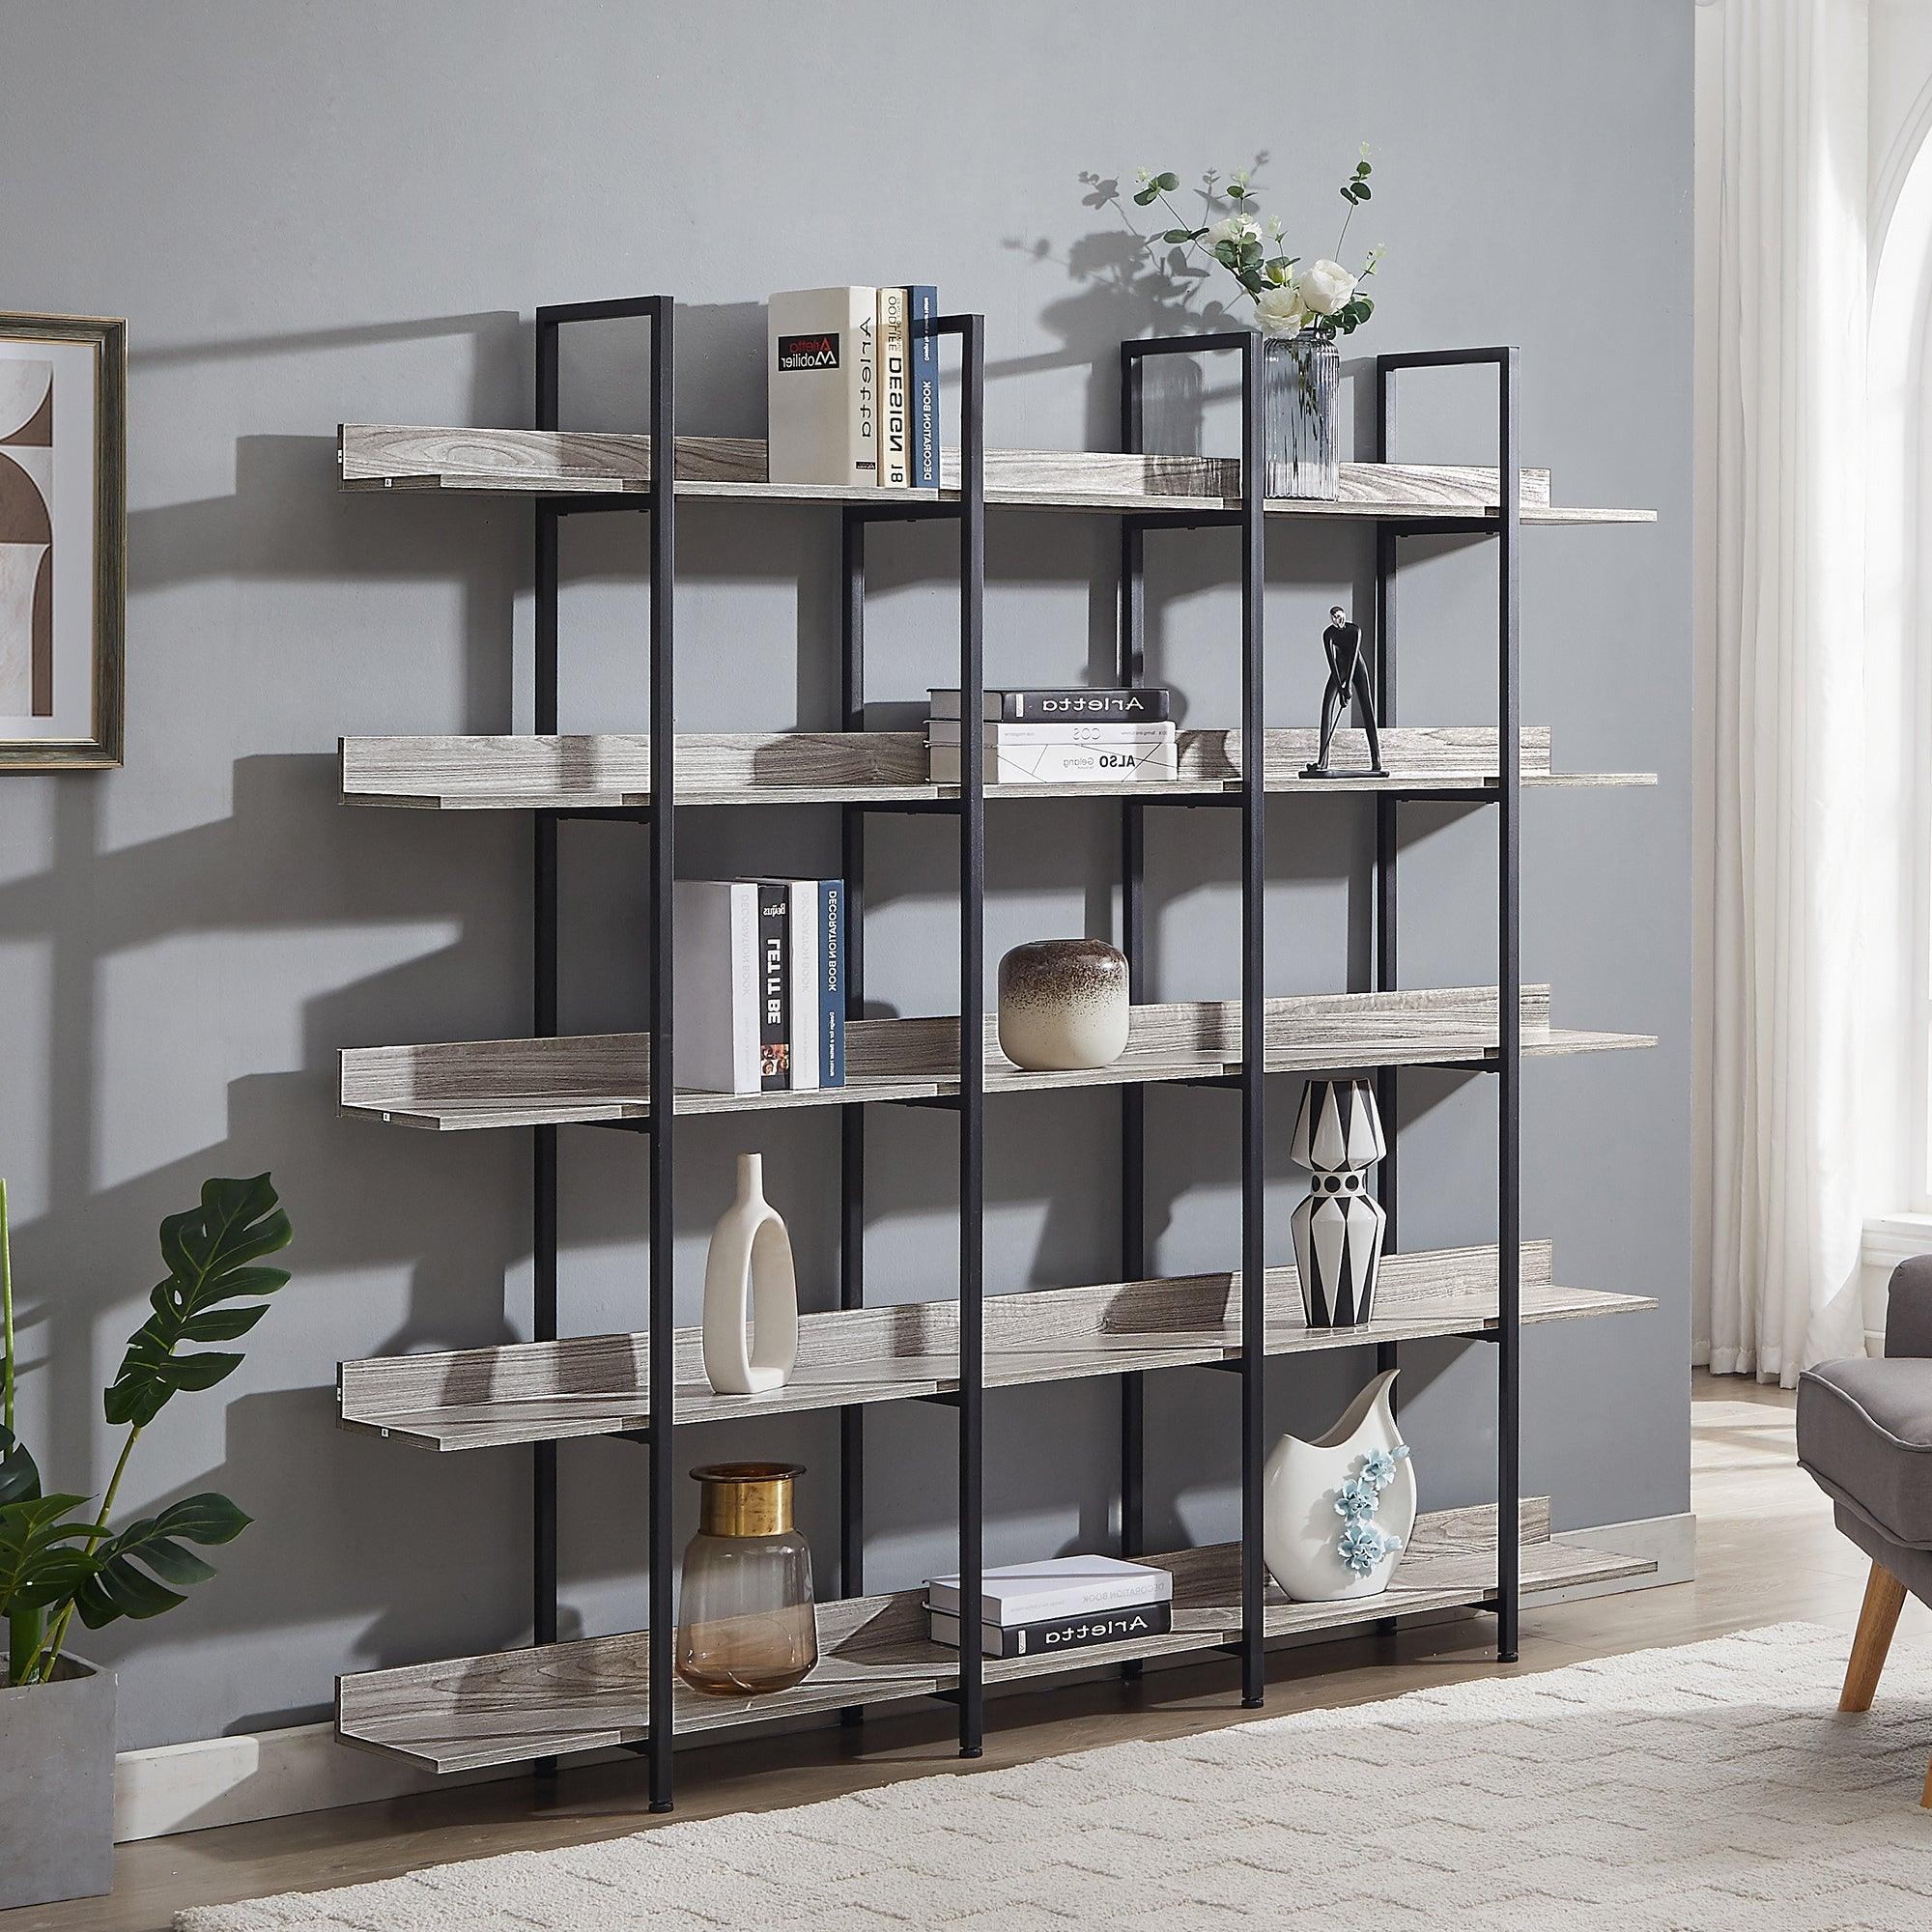 5 Tier Bookcase Home Office Open Bookshelf, Vintage Industrial Style Shelf With Metal Frame, MDF Board, Grey LamCham